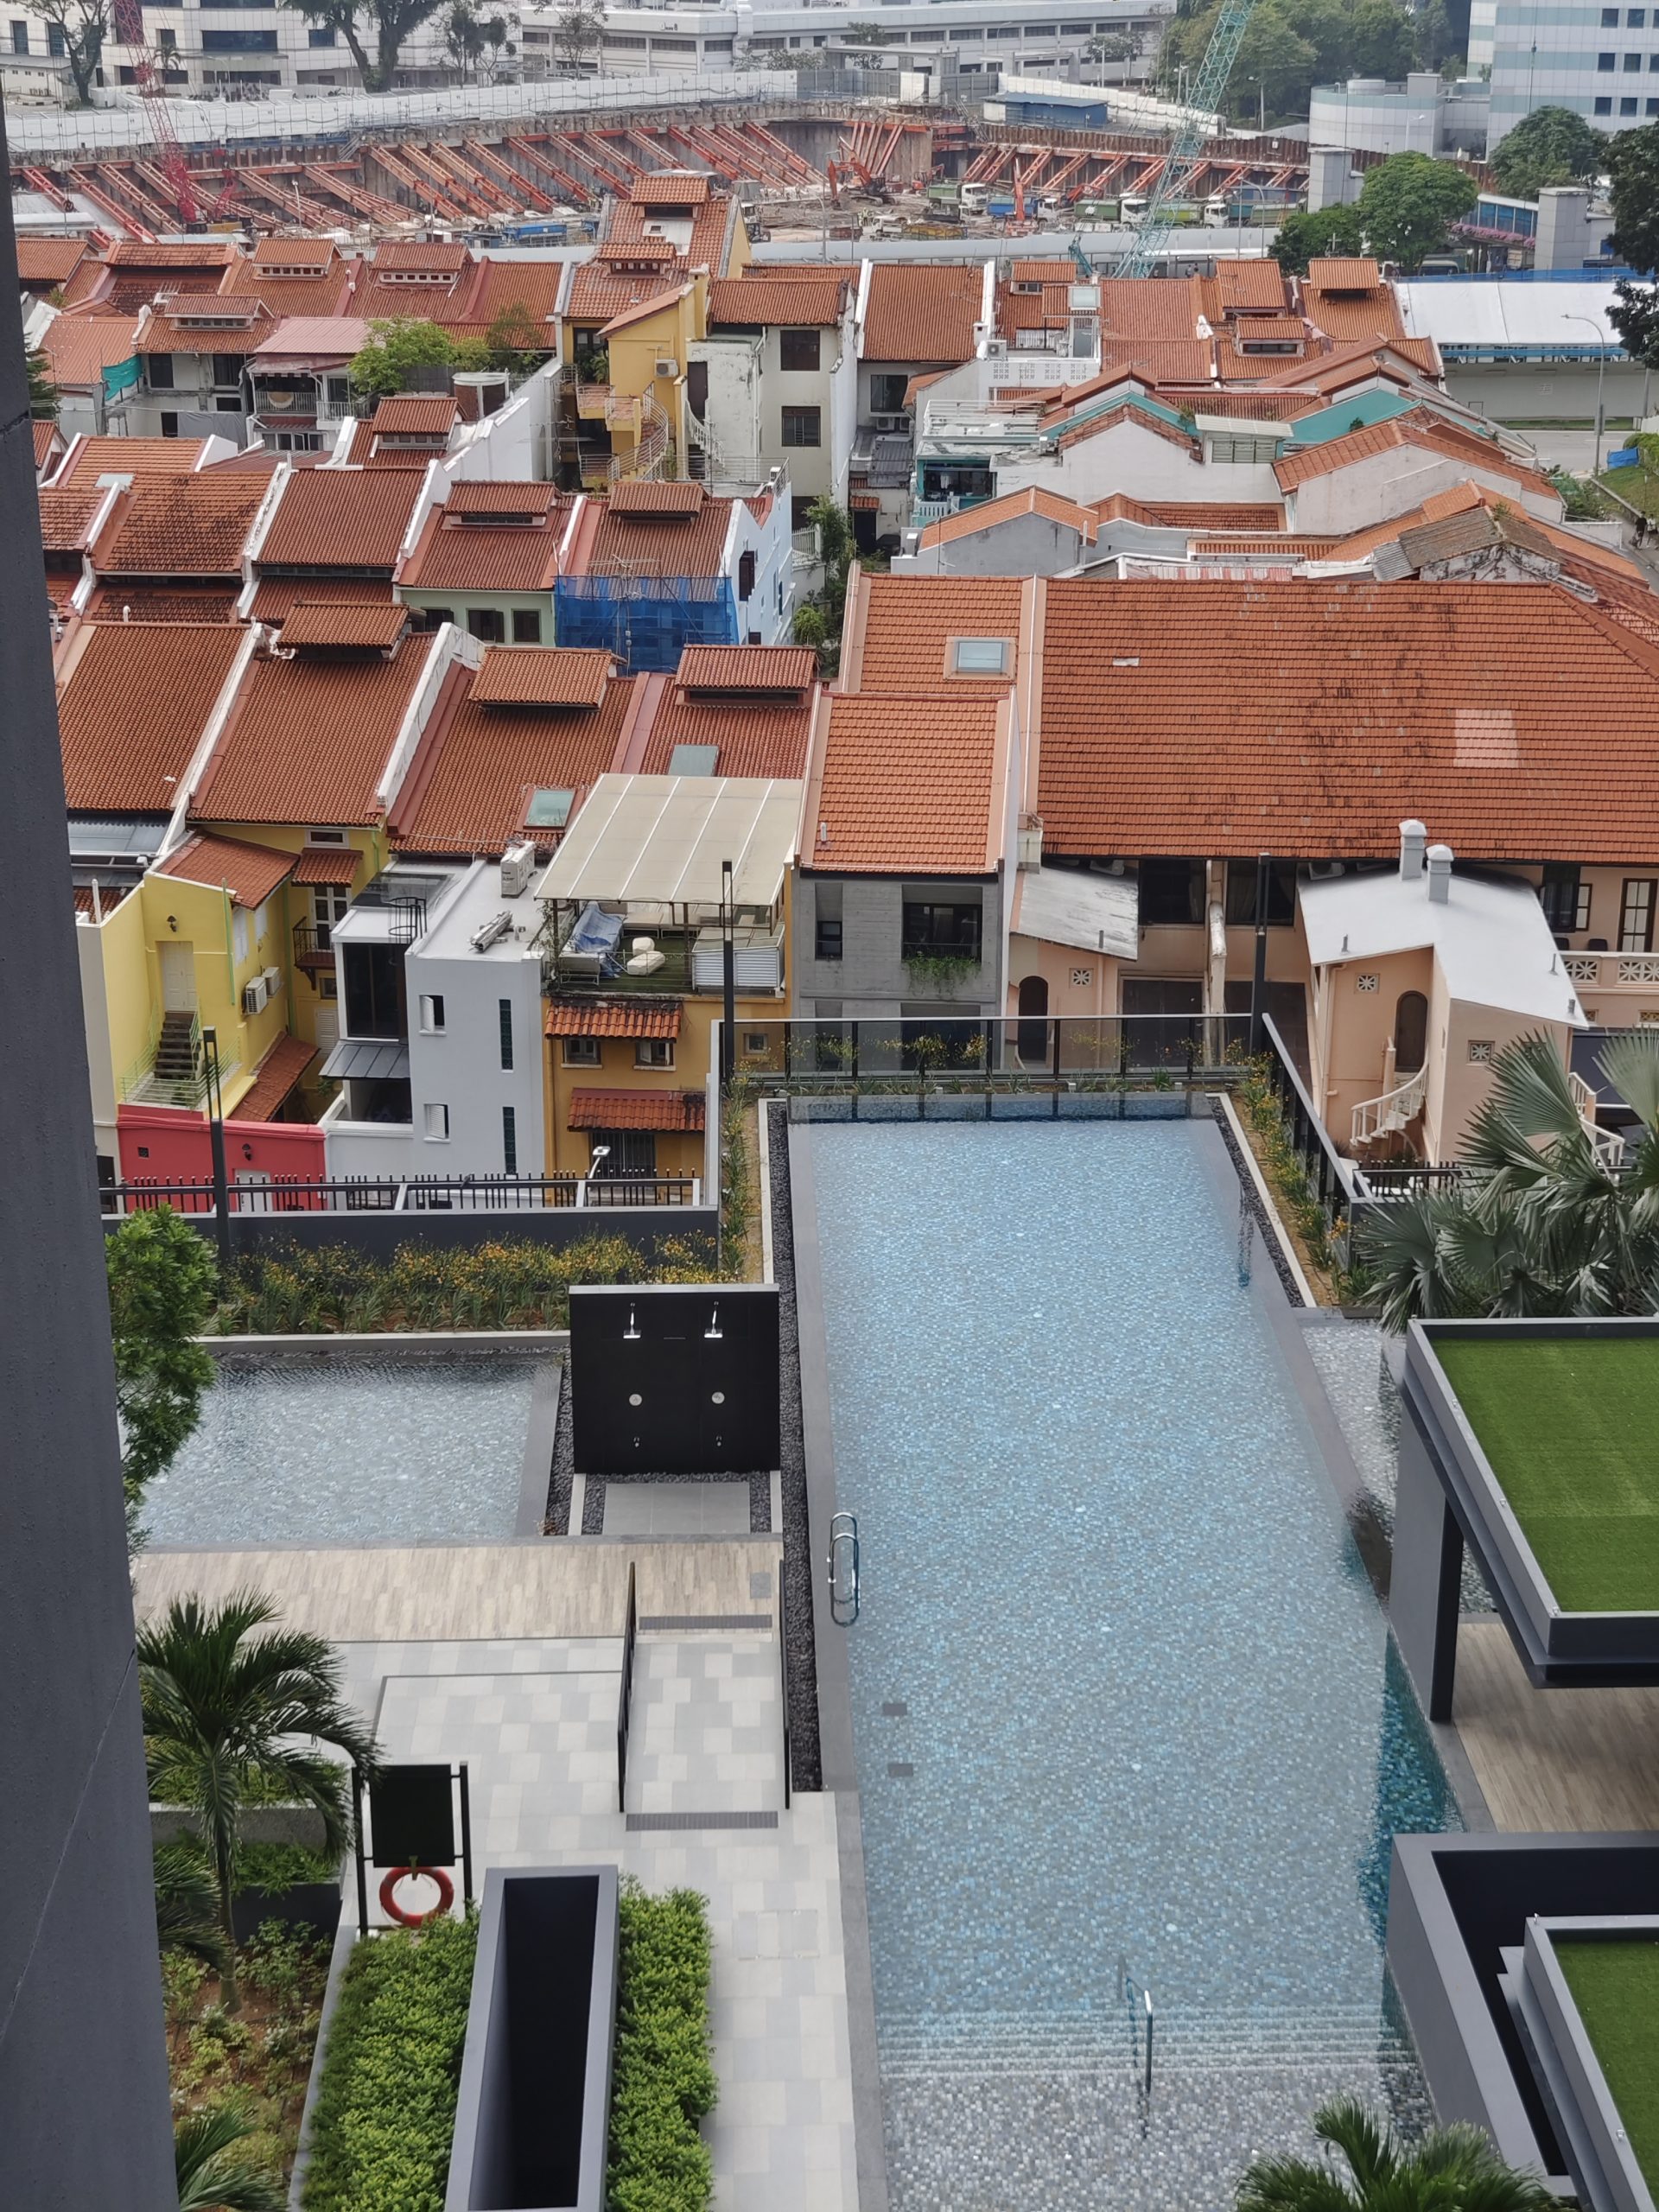 Benefits of Condo Living in Singapore